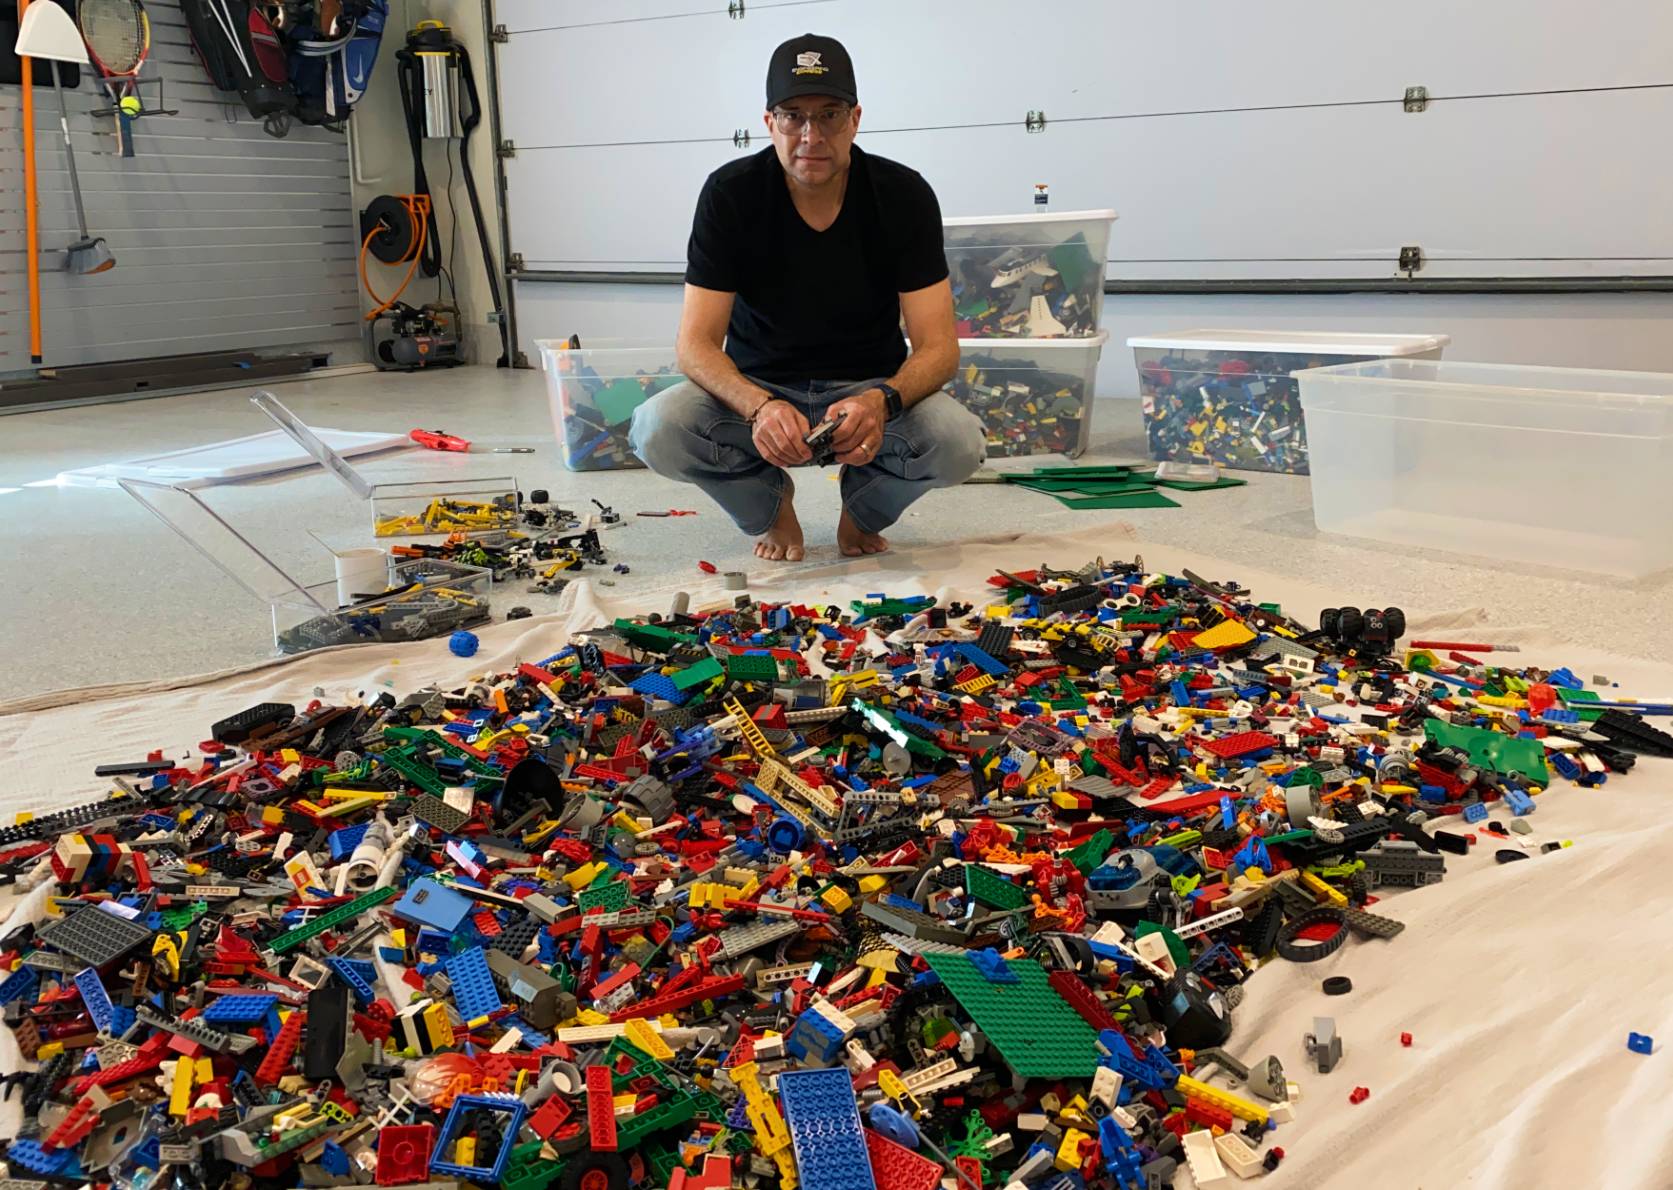 Frank sorting through Legos